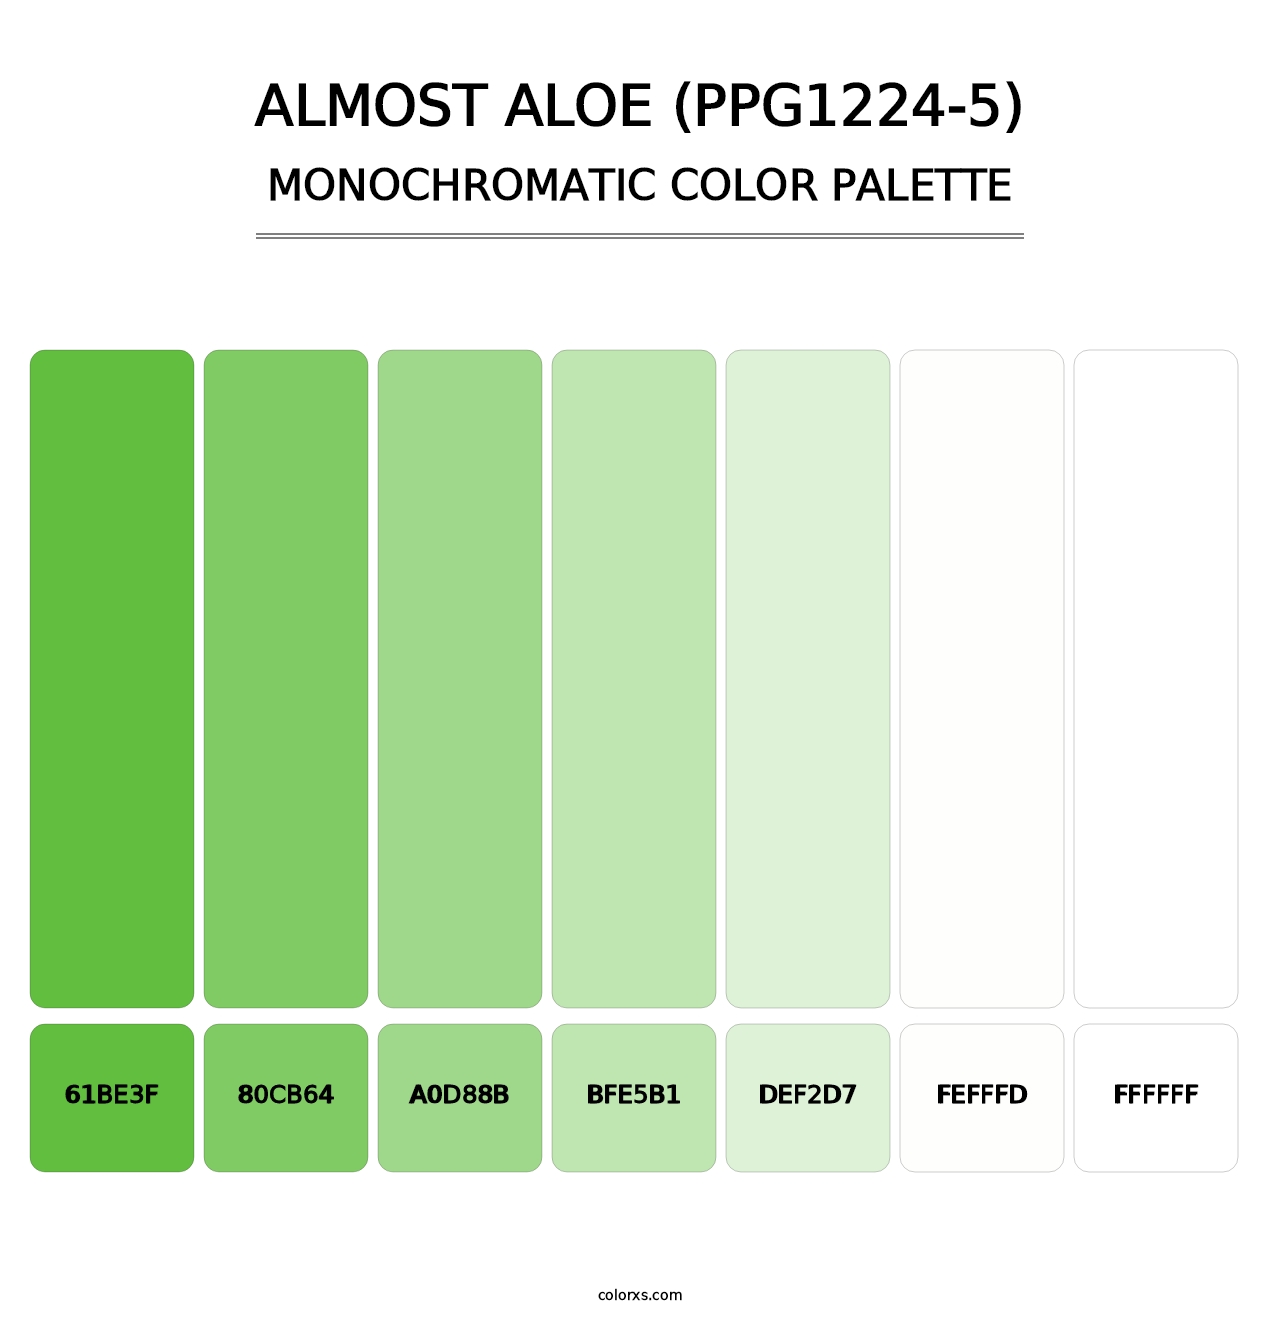 Almost Aloe (PPG1224-5) - Monochromatic Color Palette